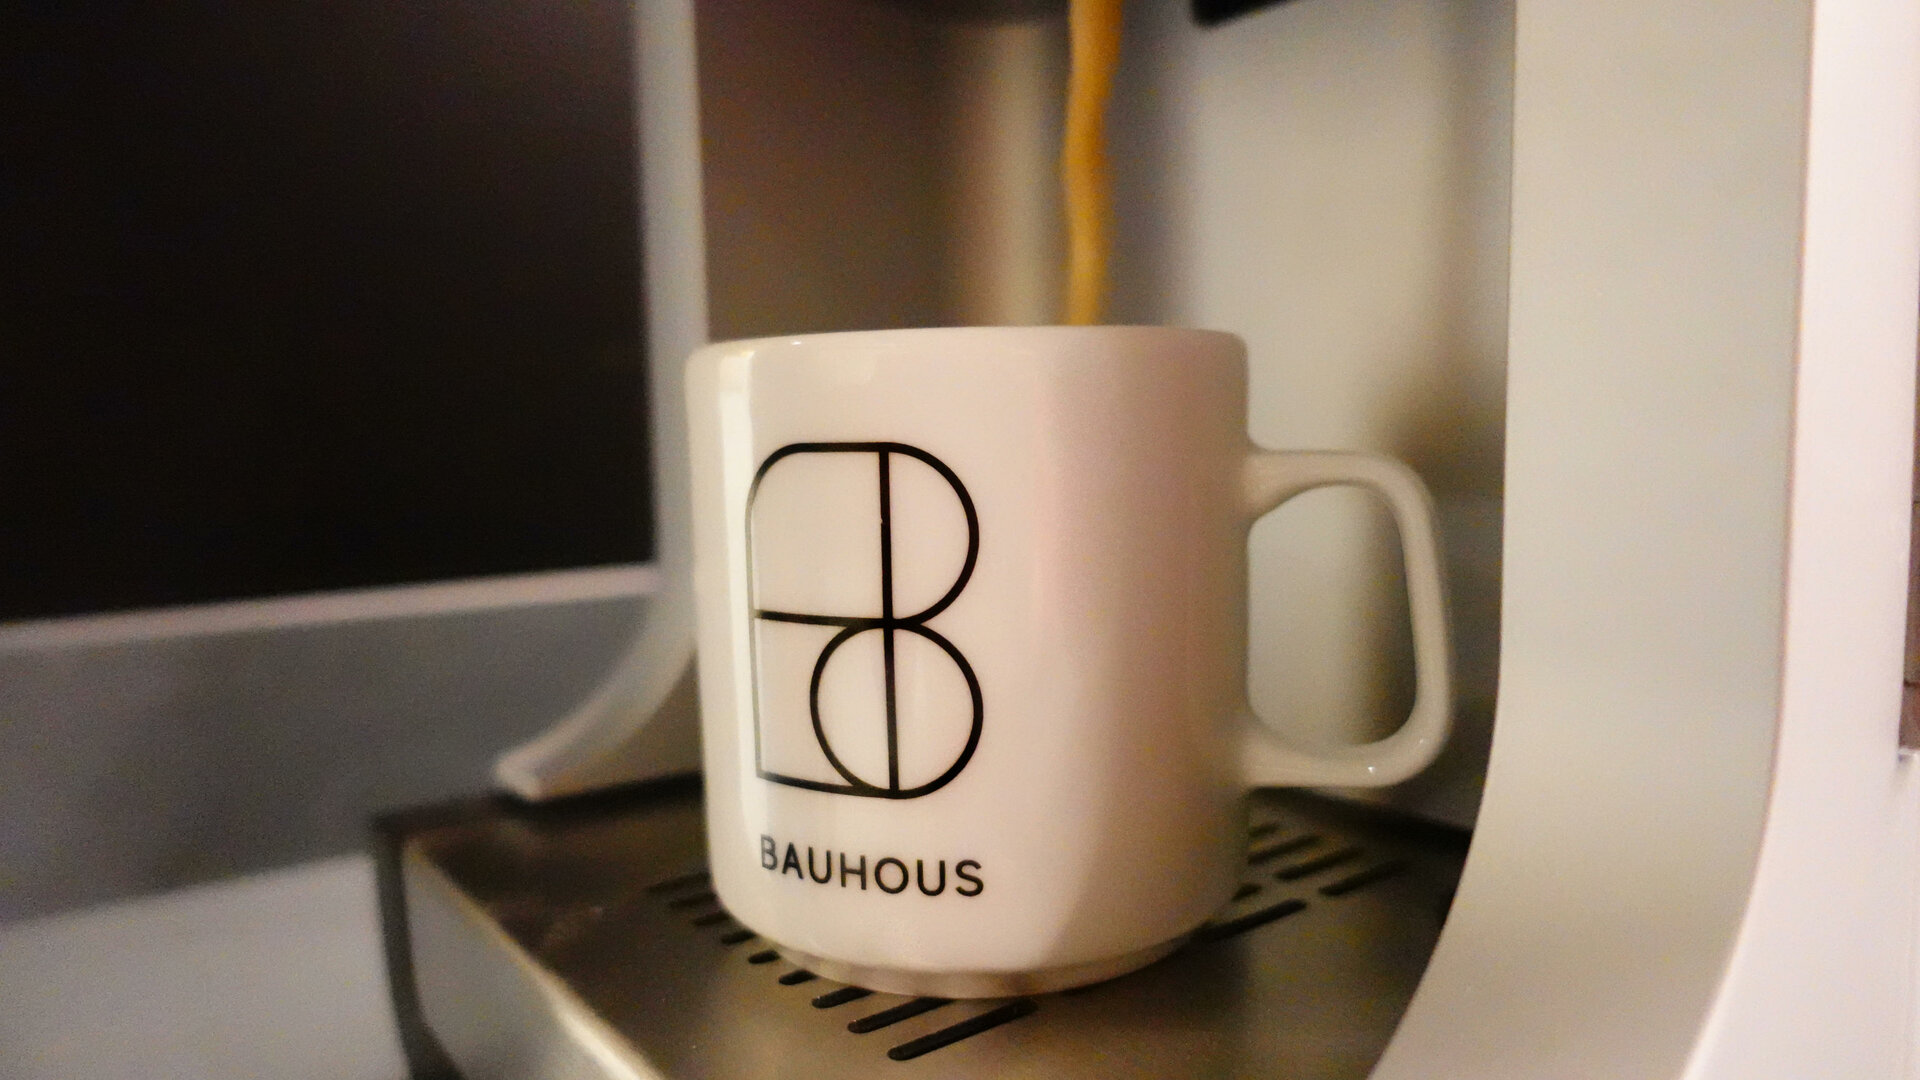 Bauhous - Koffie